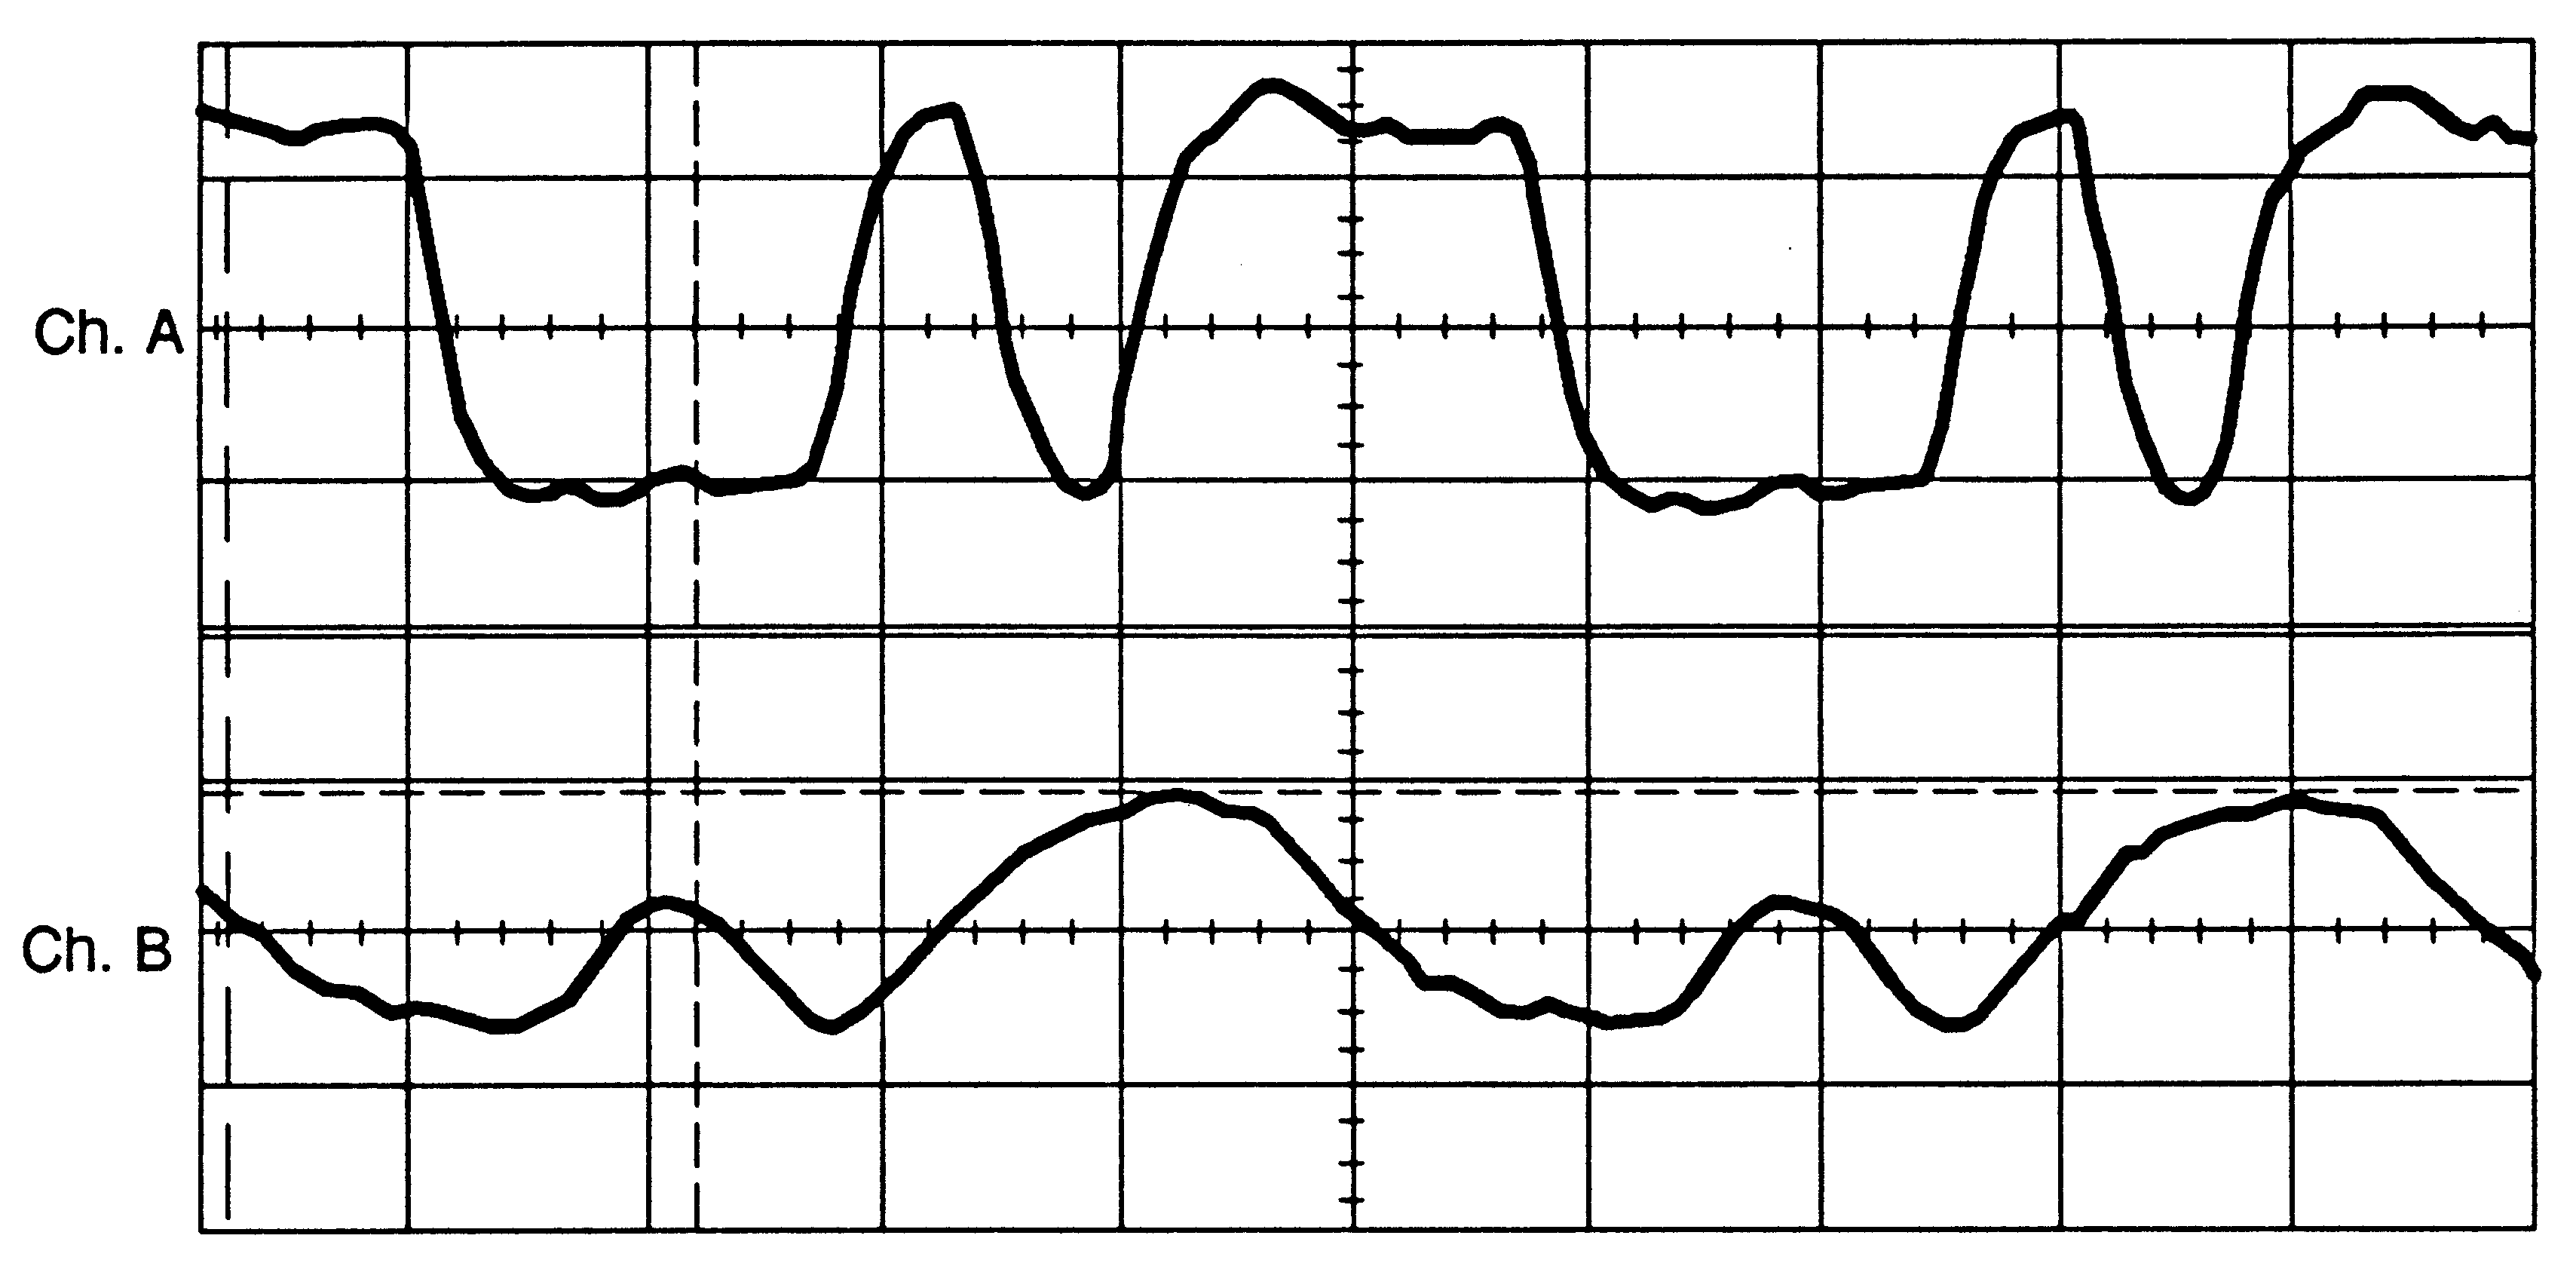 TTL signals
Ch.A/Ch.B corresponding to figure 11